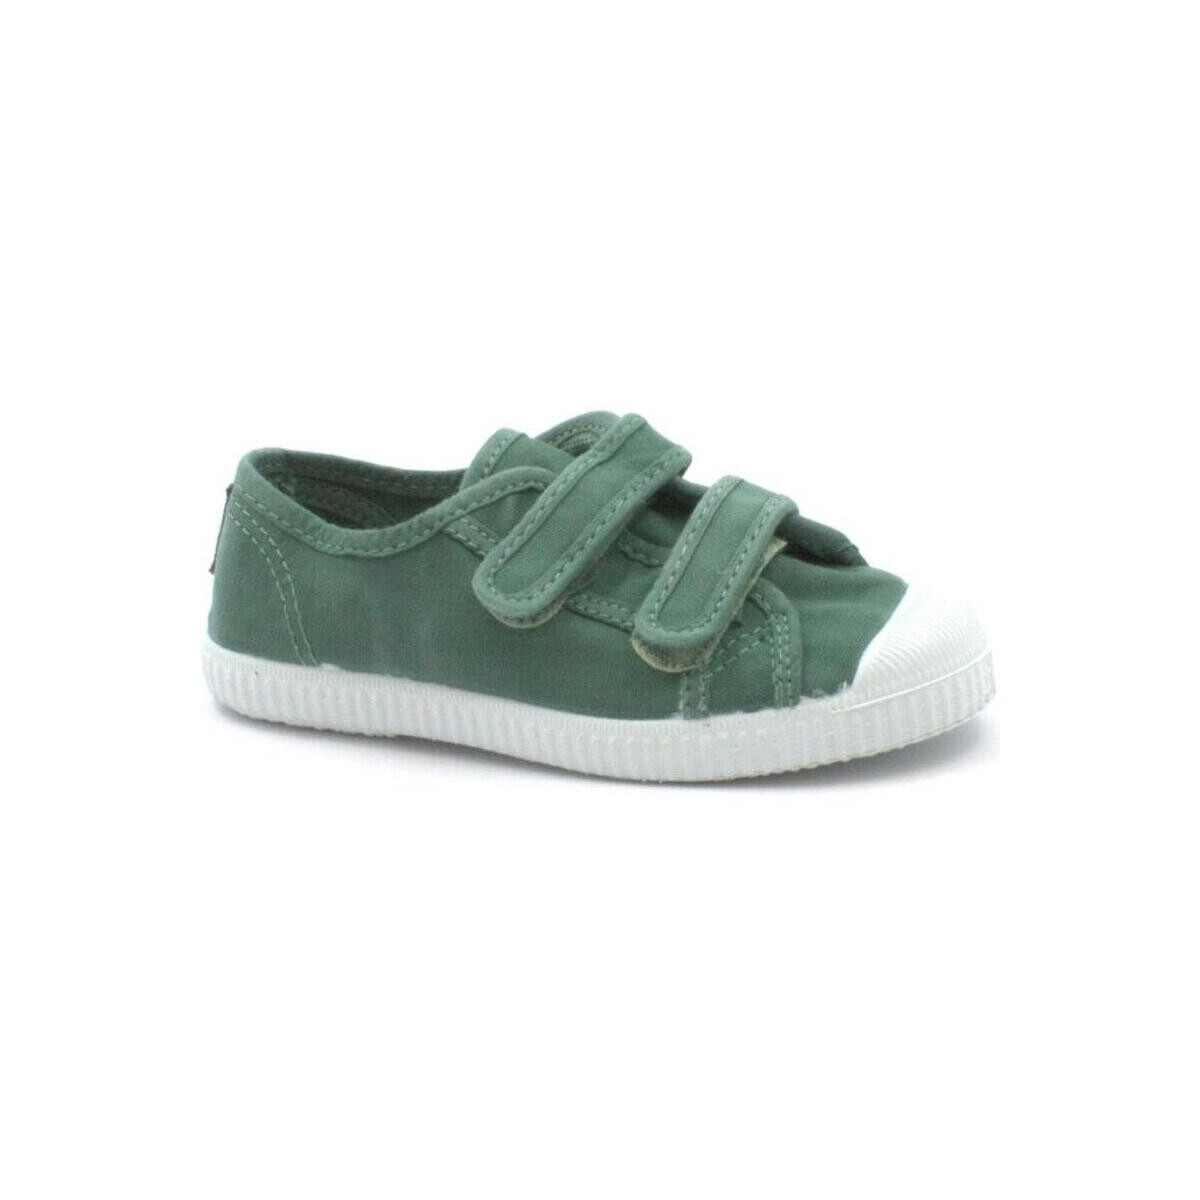 Schuhe Kinder Sneaker Low Cienta CIE-CCC-78777-189 Grün